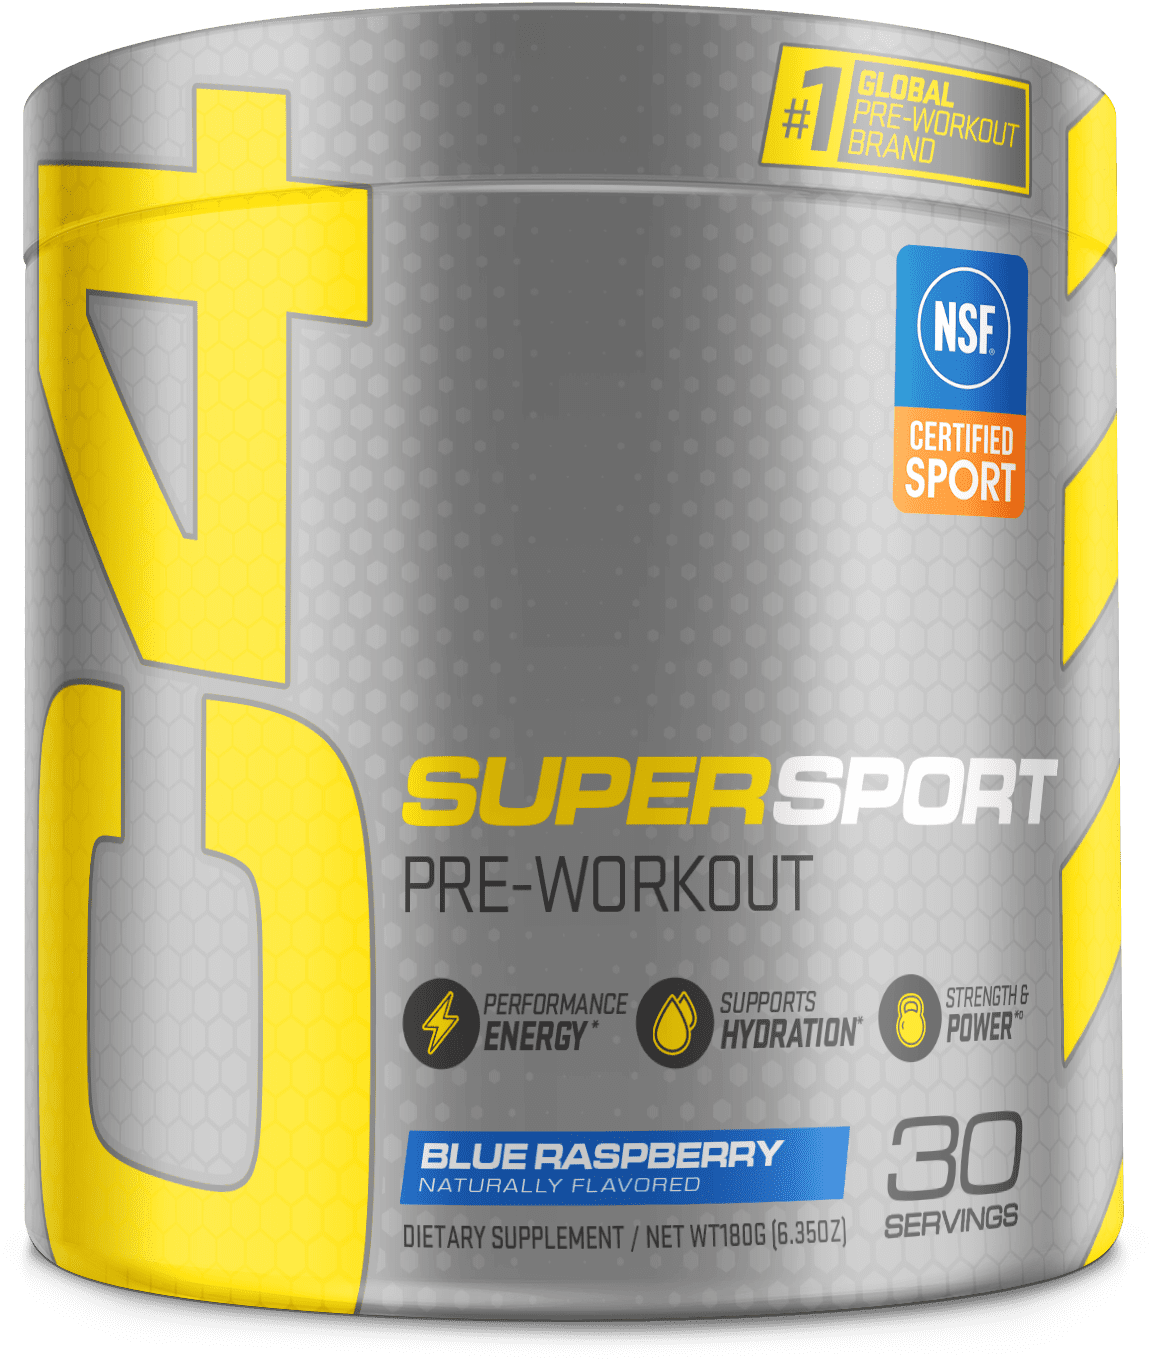 Cellucor C4 Super Sport Pre-Workout, Blue Raspberry, Energy, Strength & Power, 30 Servings